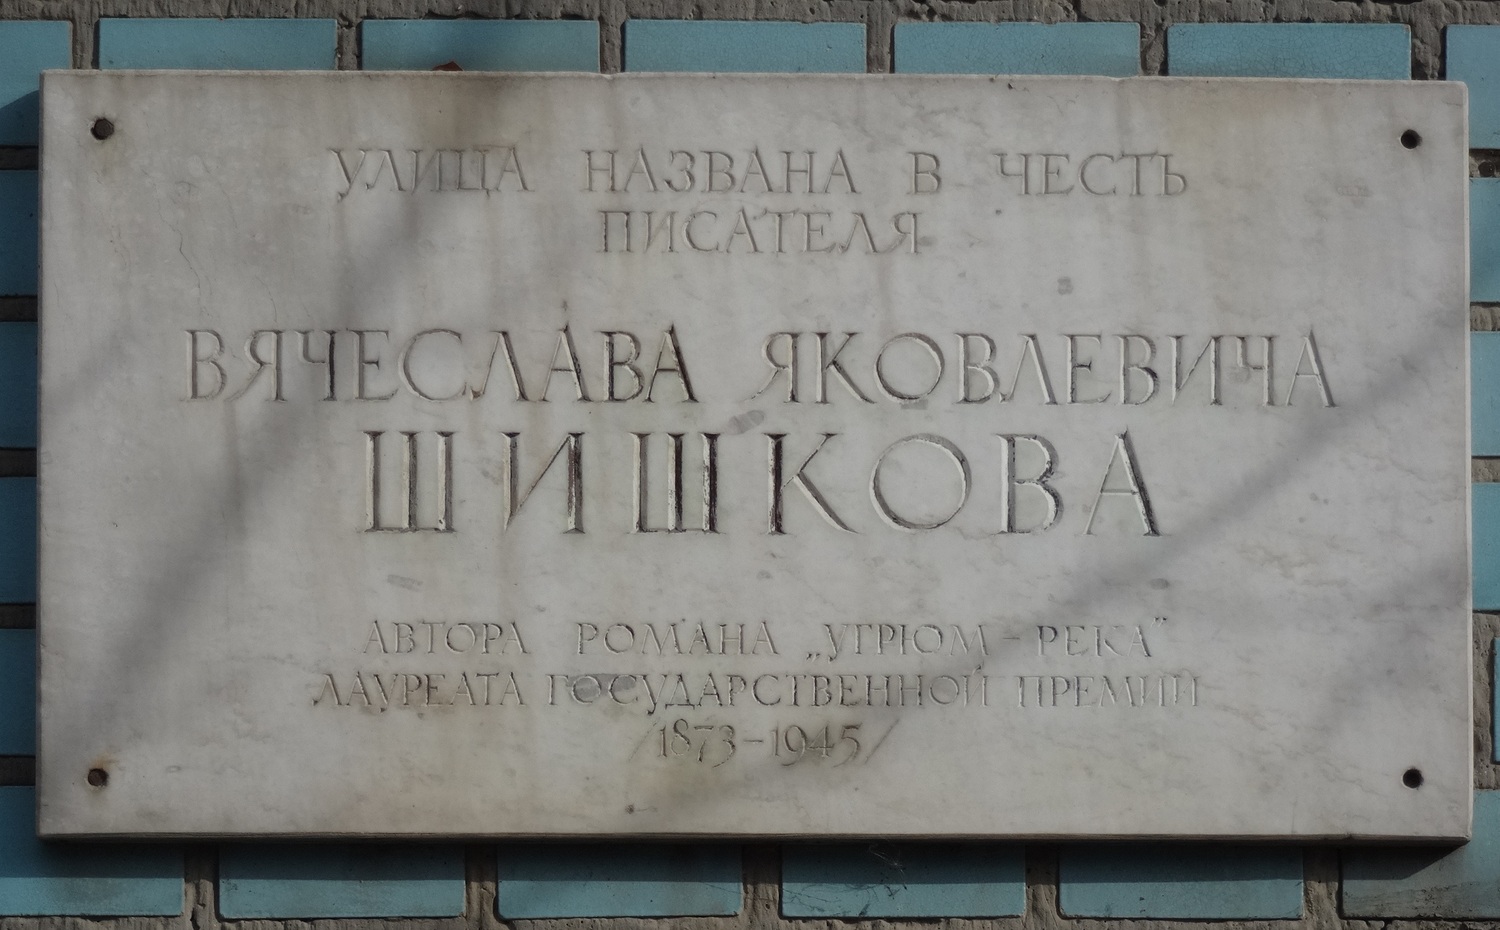 Irkutsk, . Irkutsk — Commemorative plaques